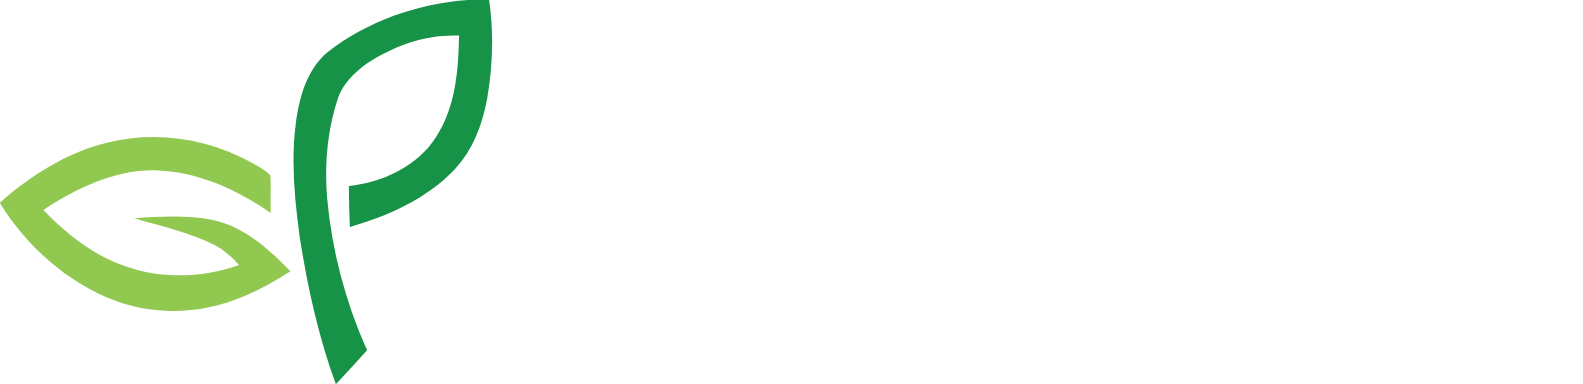 GreenPower Motor Company logo grand pour les fonds sombres (PNG transparent)